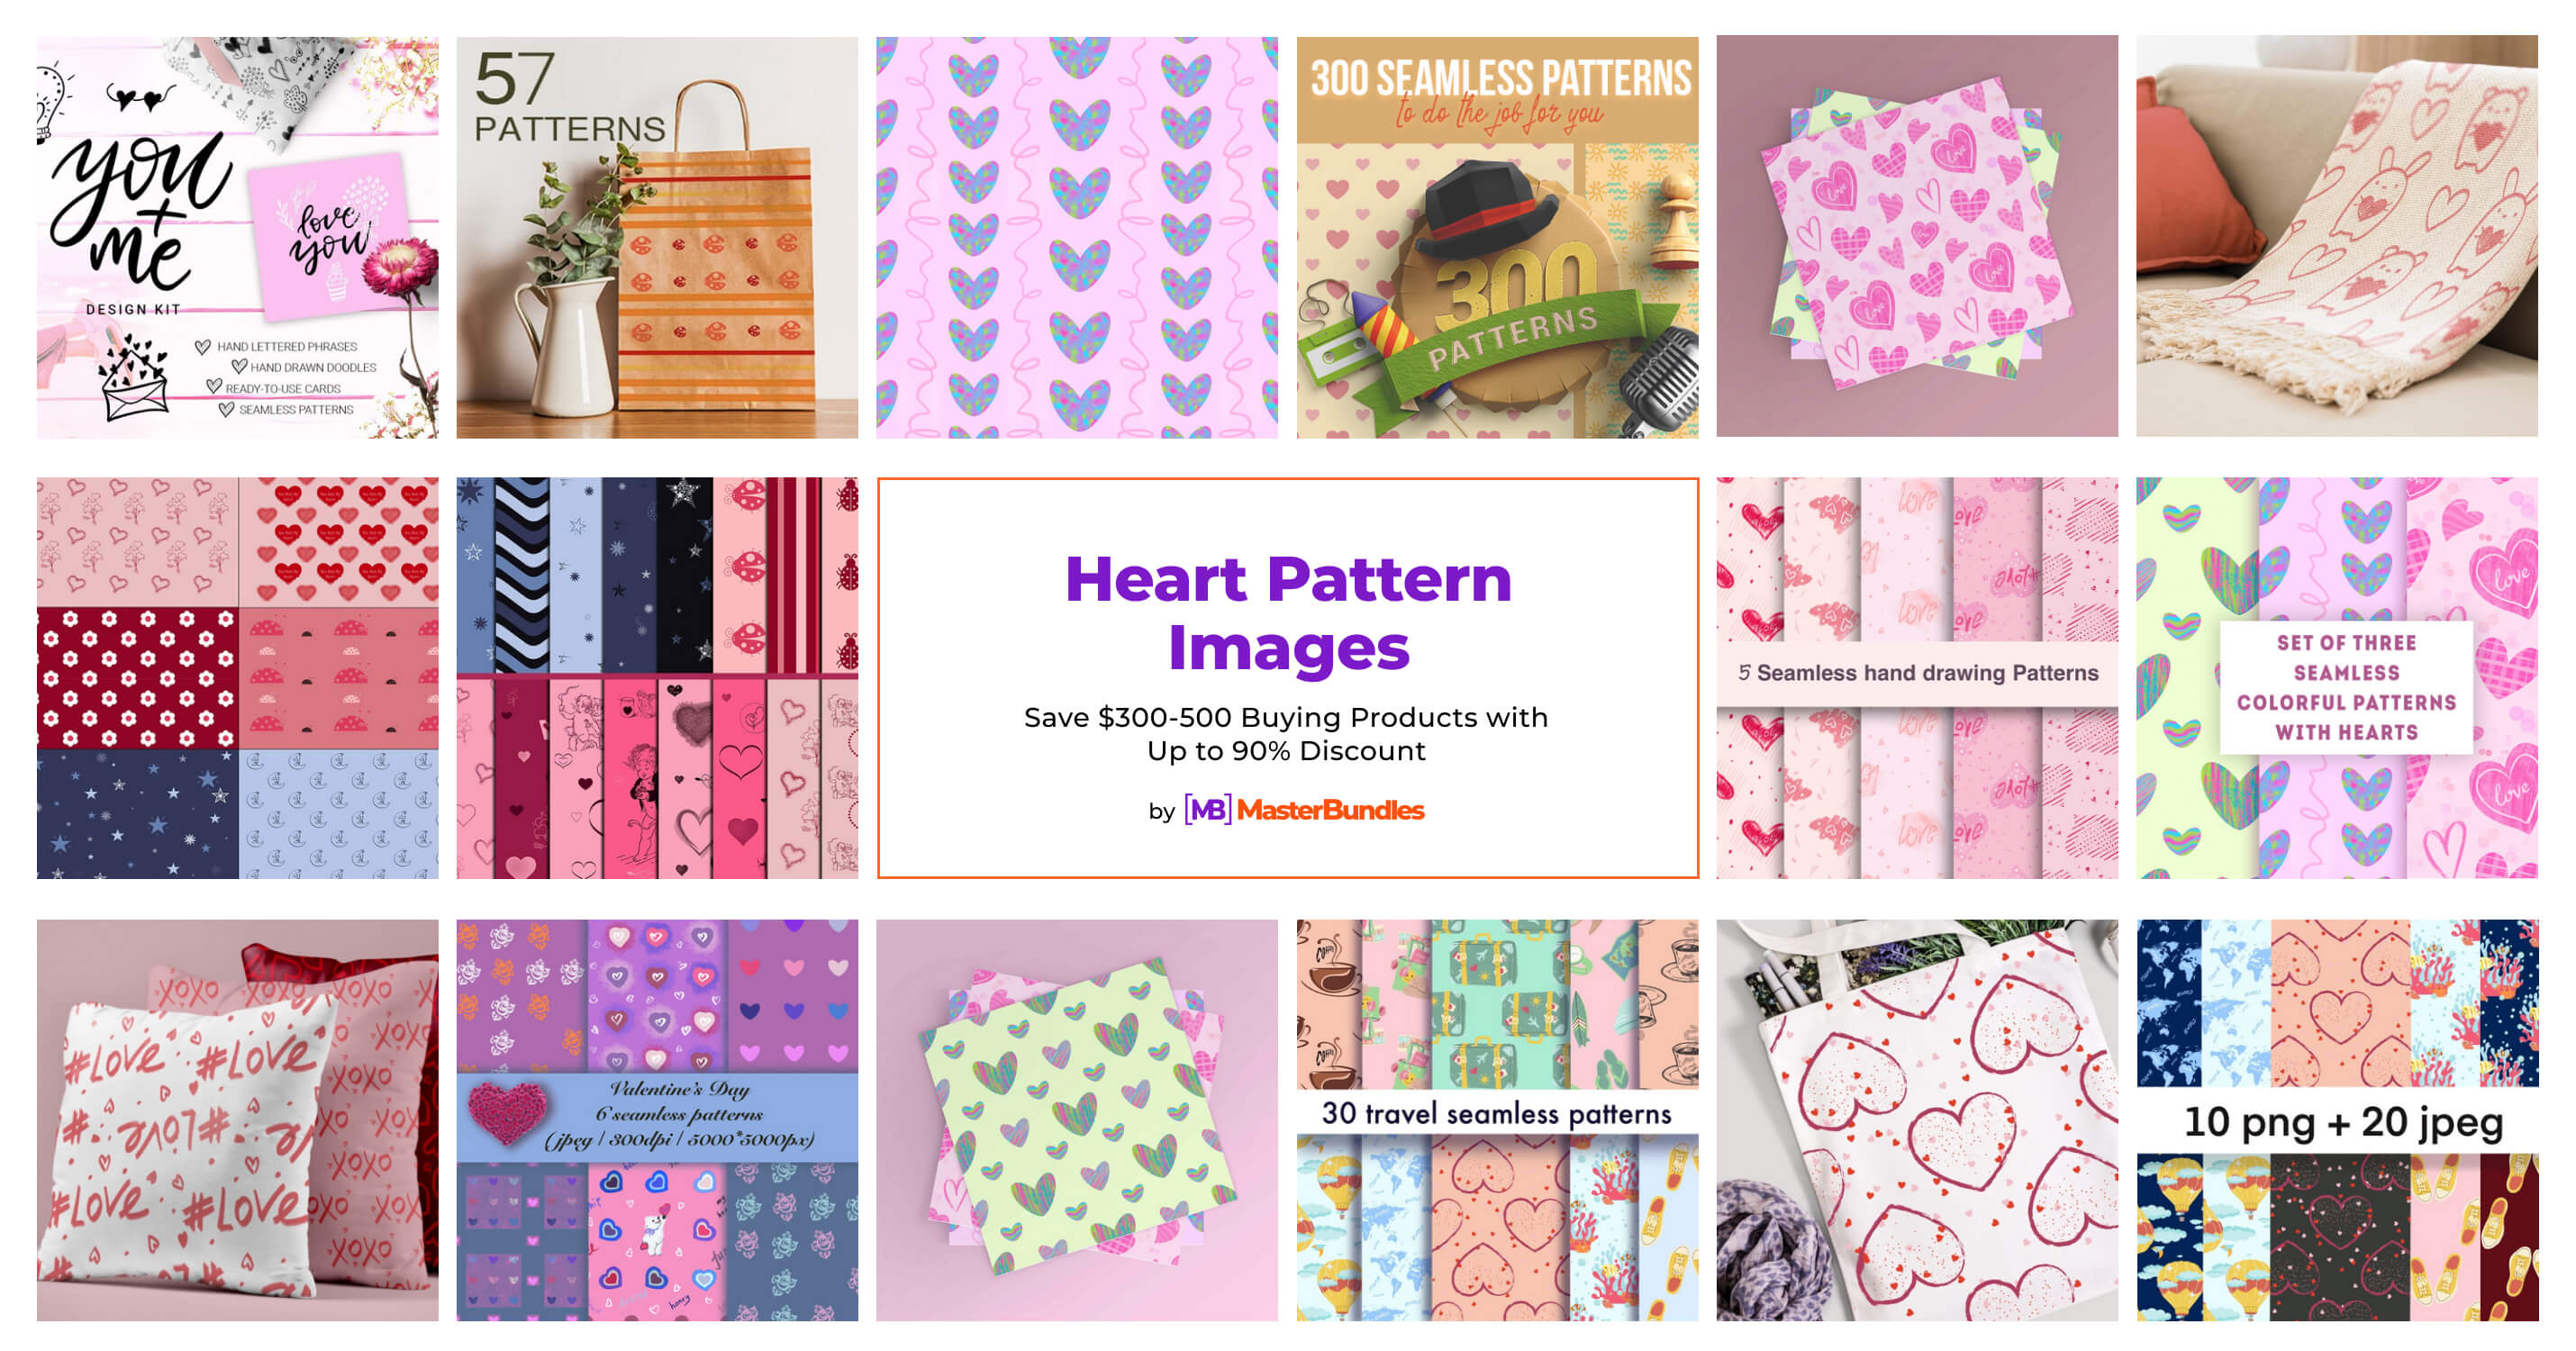 3 Seamless patterns for Valentine's Day - MasterBundles